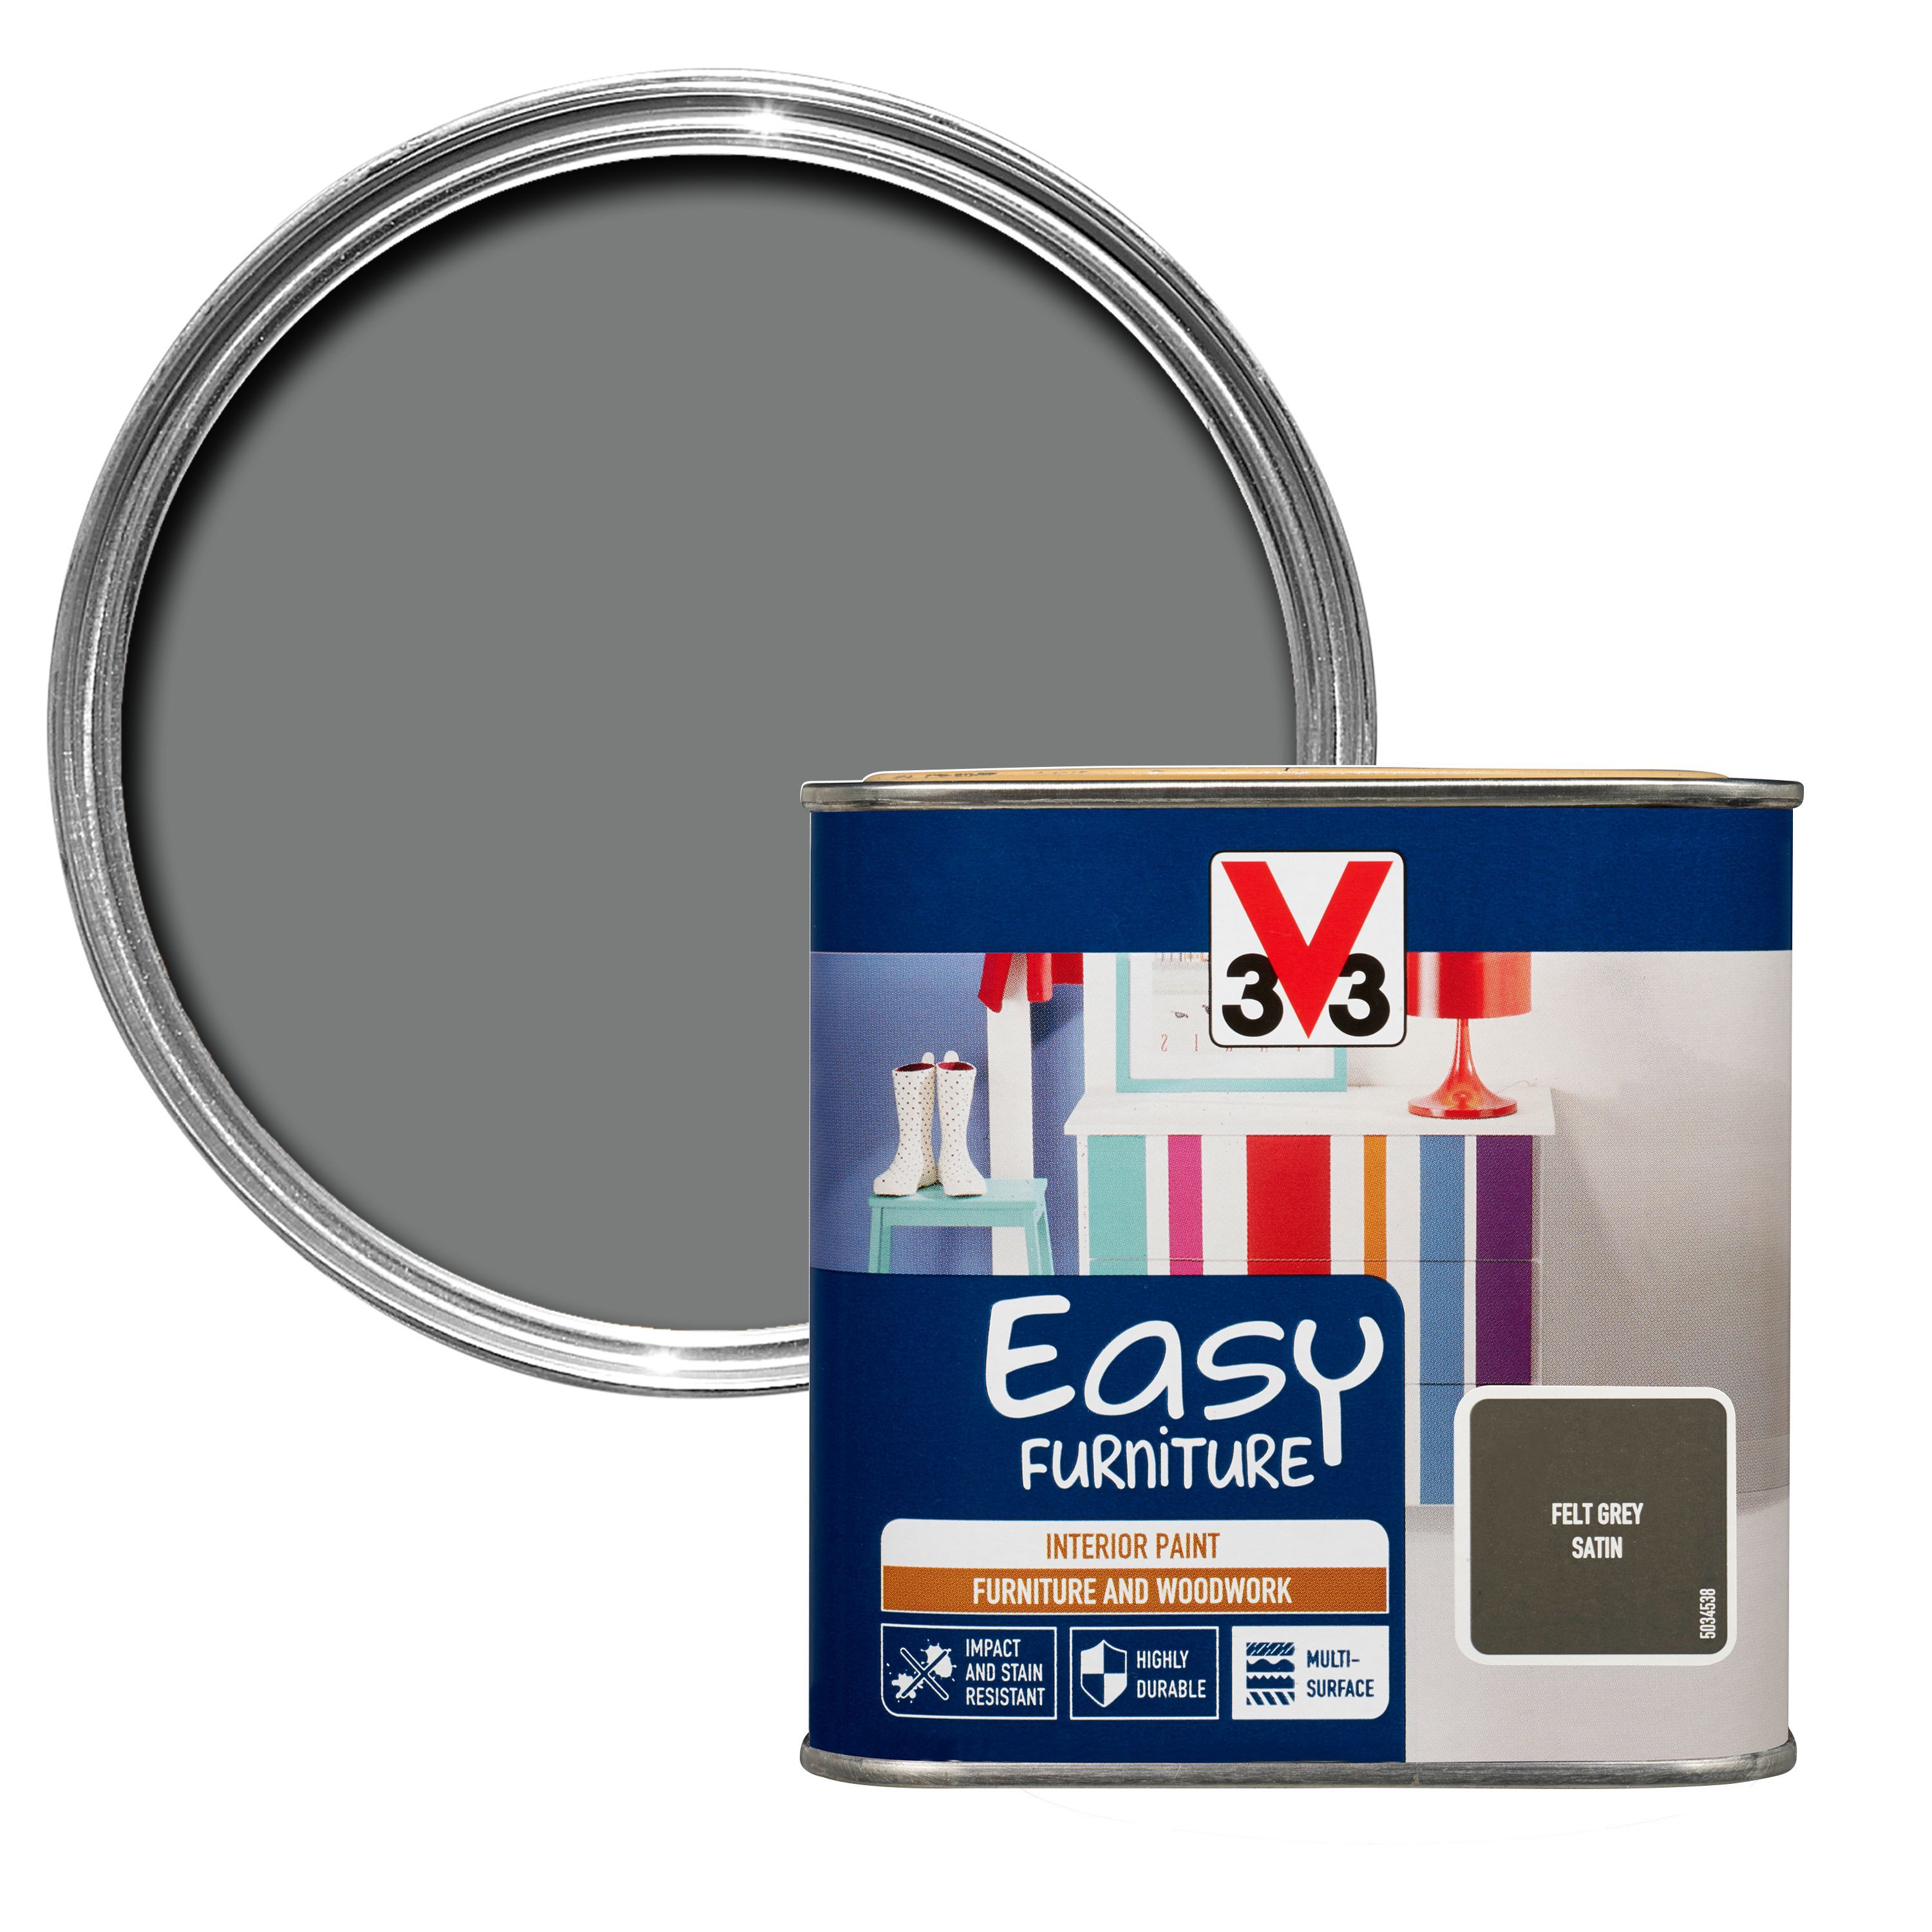 V33 Easy Felt grey Satin Furniture paint 500 ml | DIY at B&Q